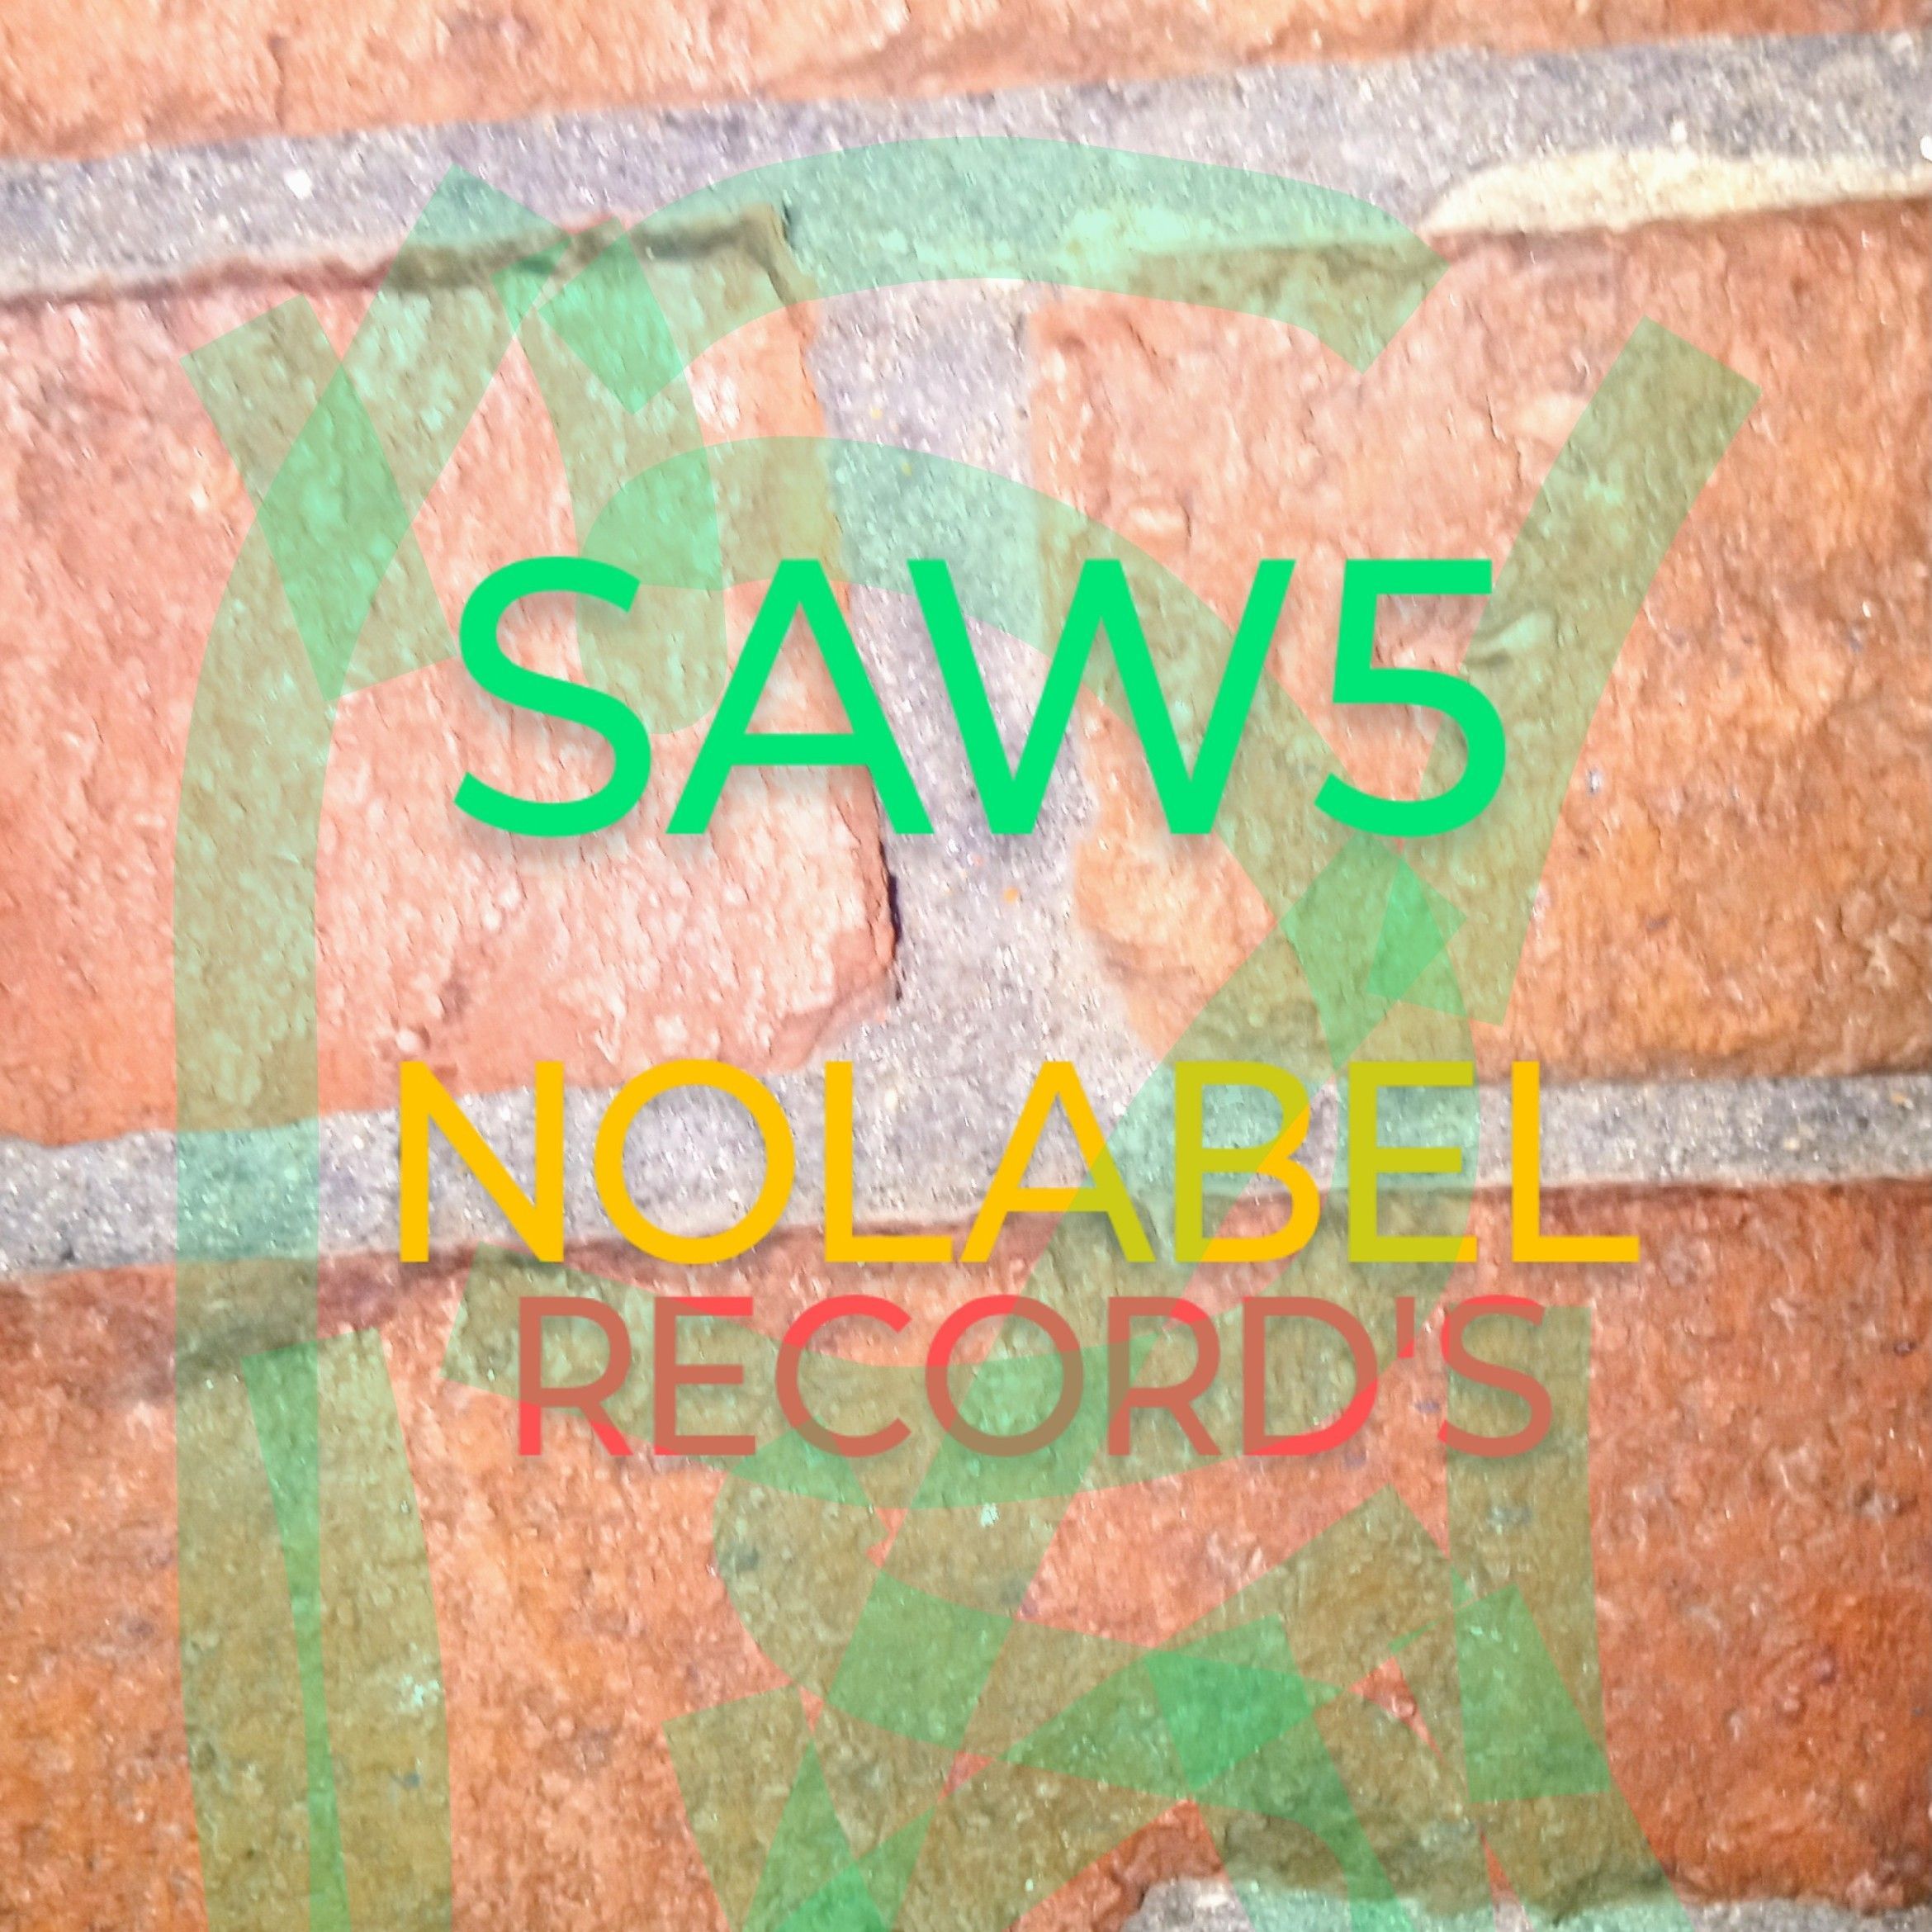 Saw5Nolabel Record's, 114 N 10th St, Hamilton, 45011